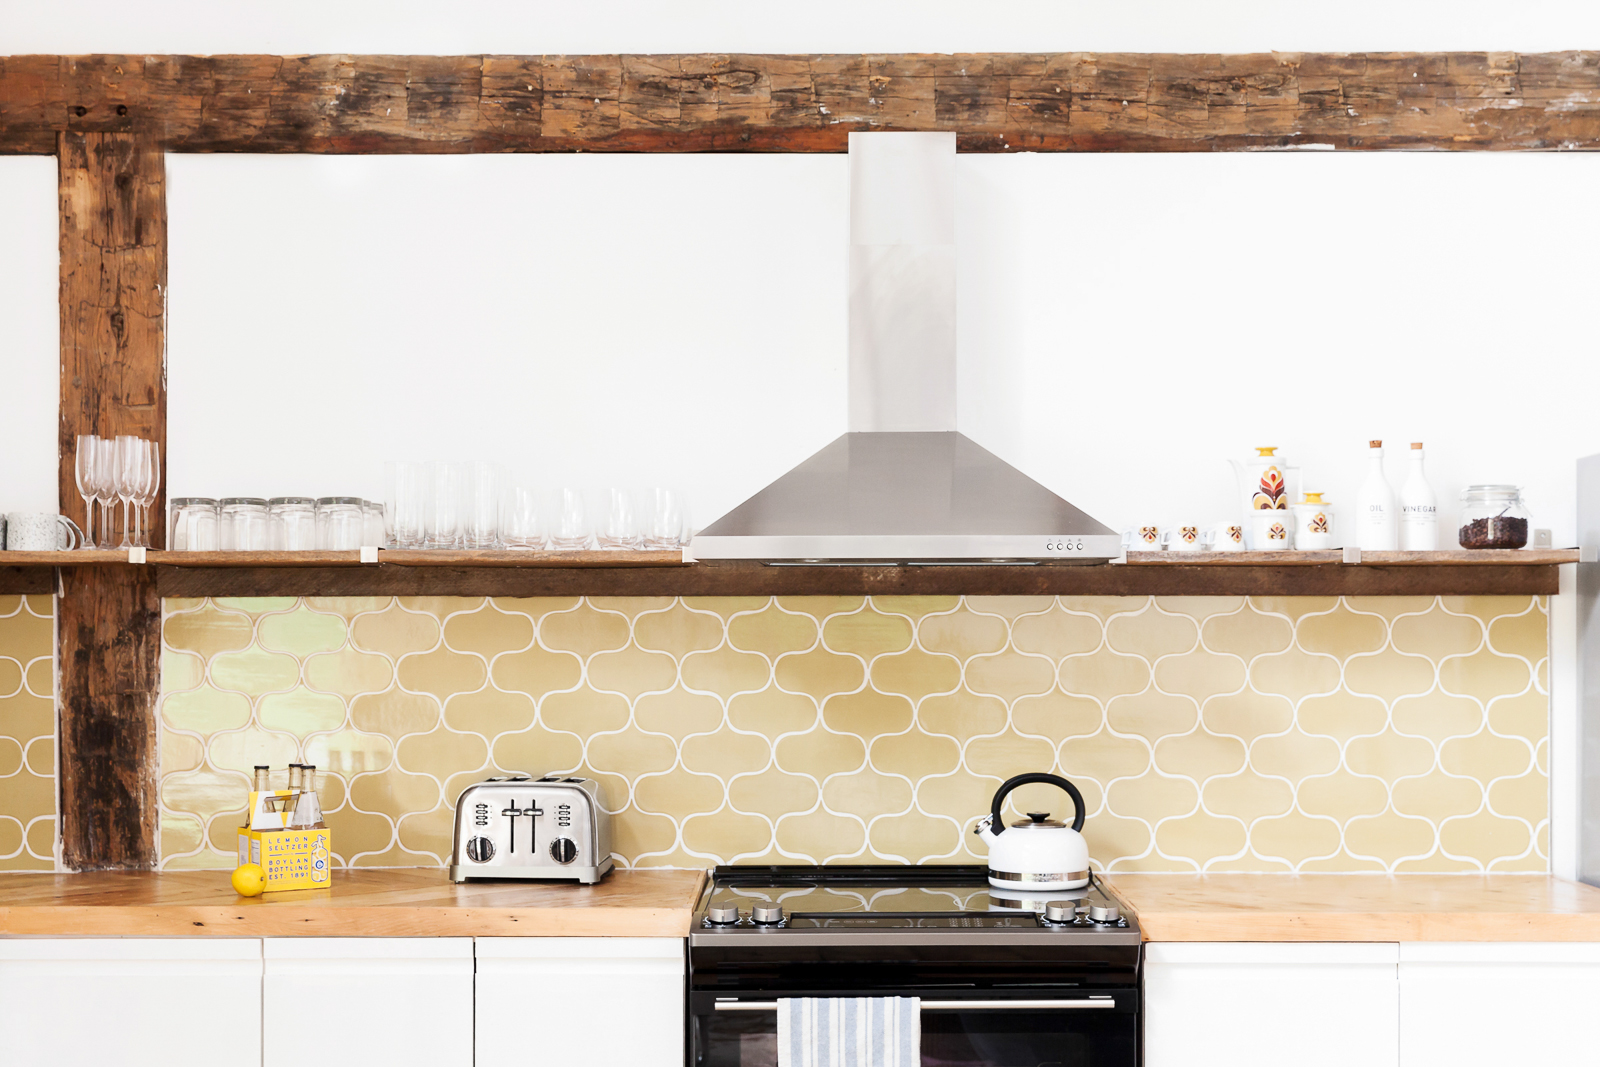 Kitchen backsplash and appliances on countertop